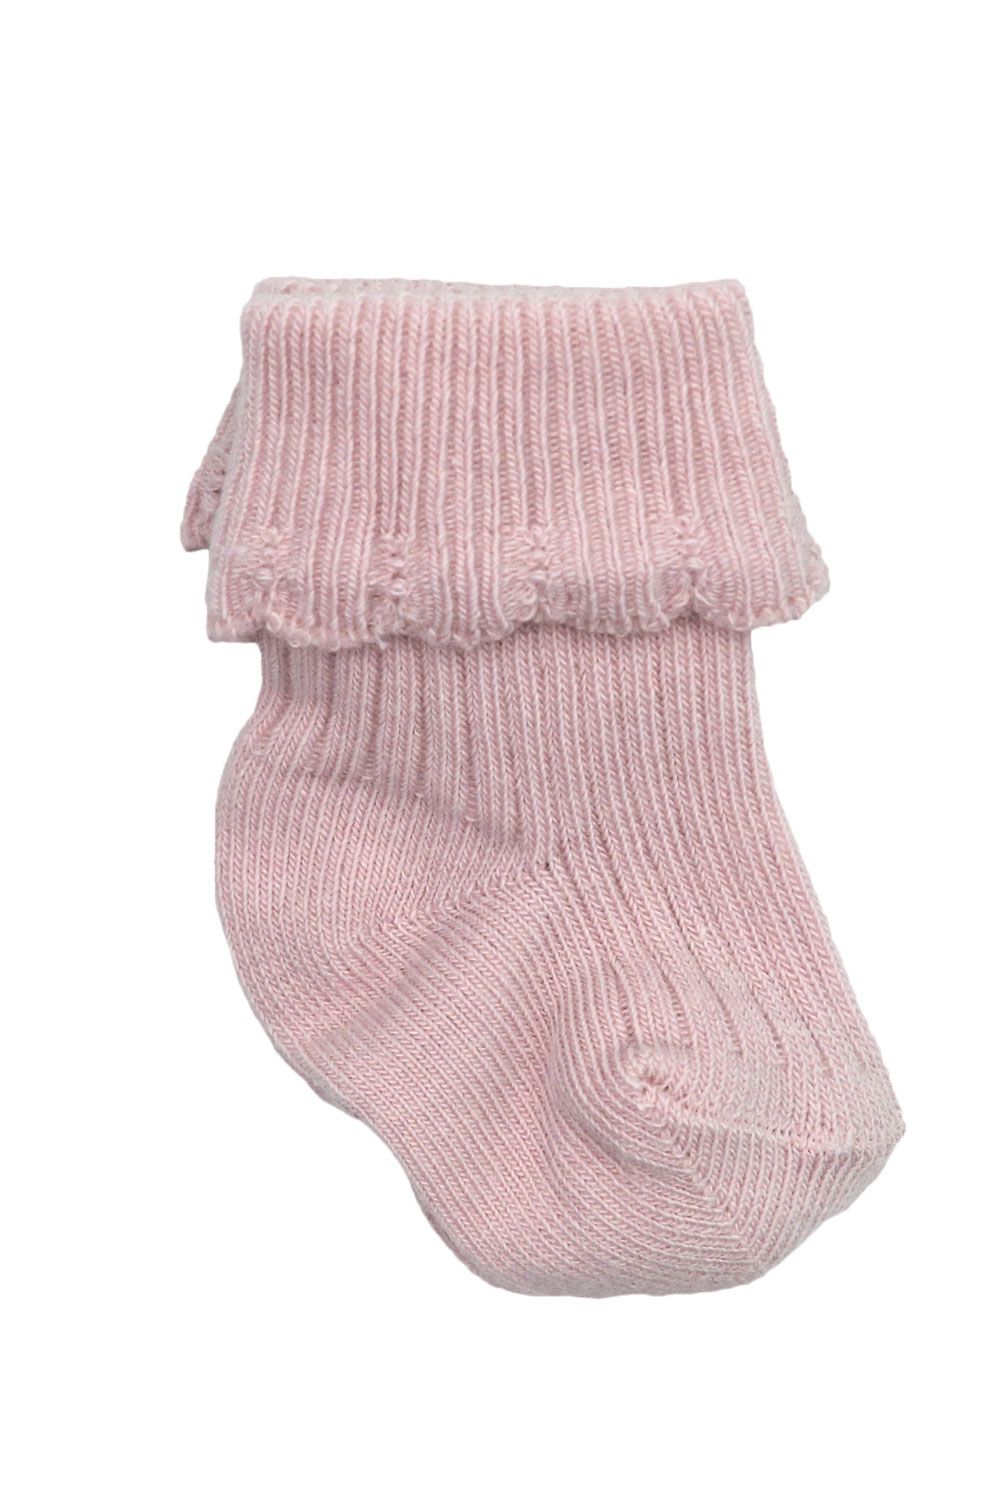 Carlomagno Folded Cuff Newborn Scottish Yarn Socks (White/Pink)